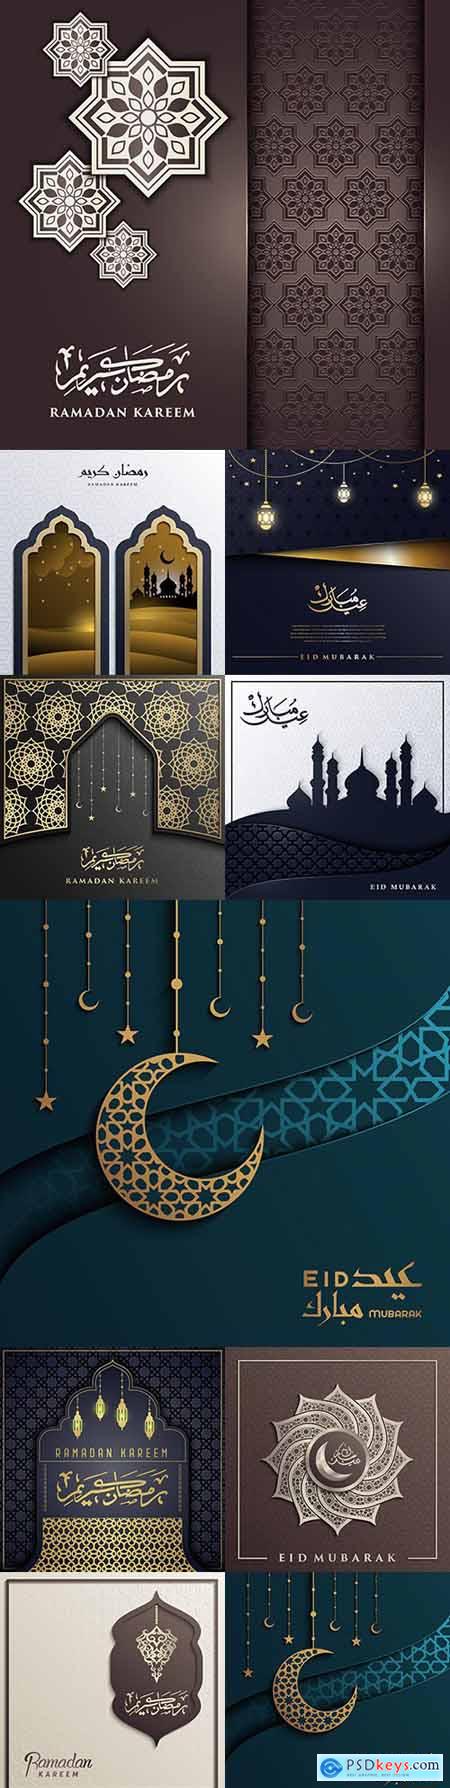 Ramadan Kareem greeting with golden Islamic pattern